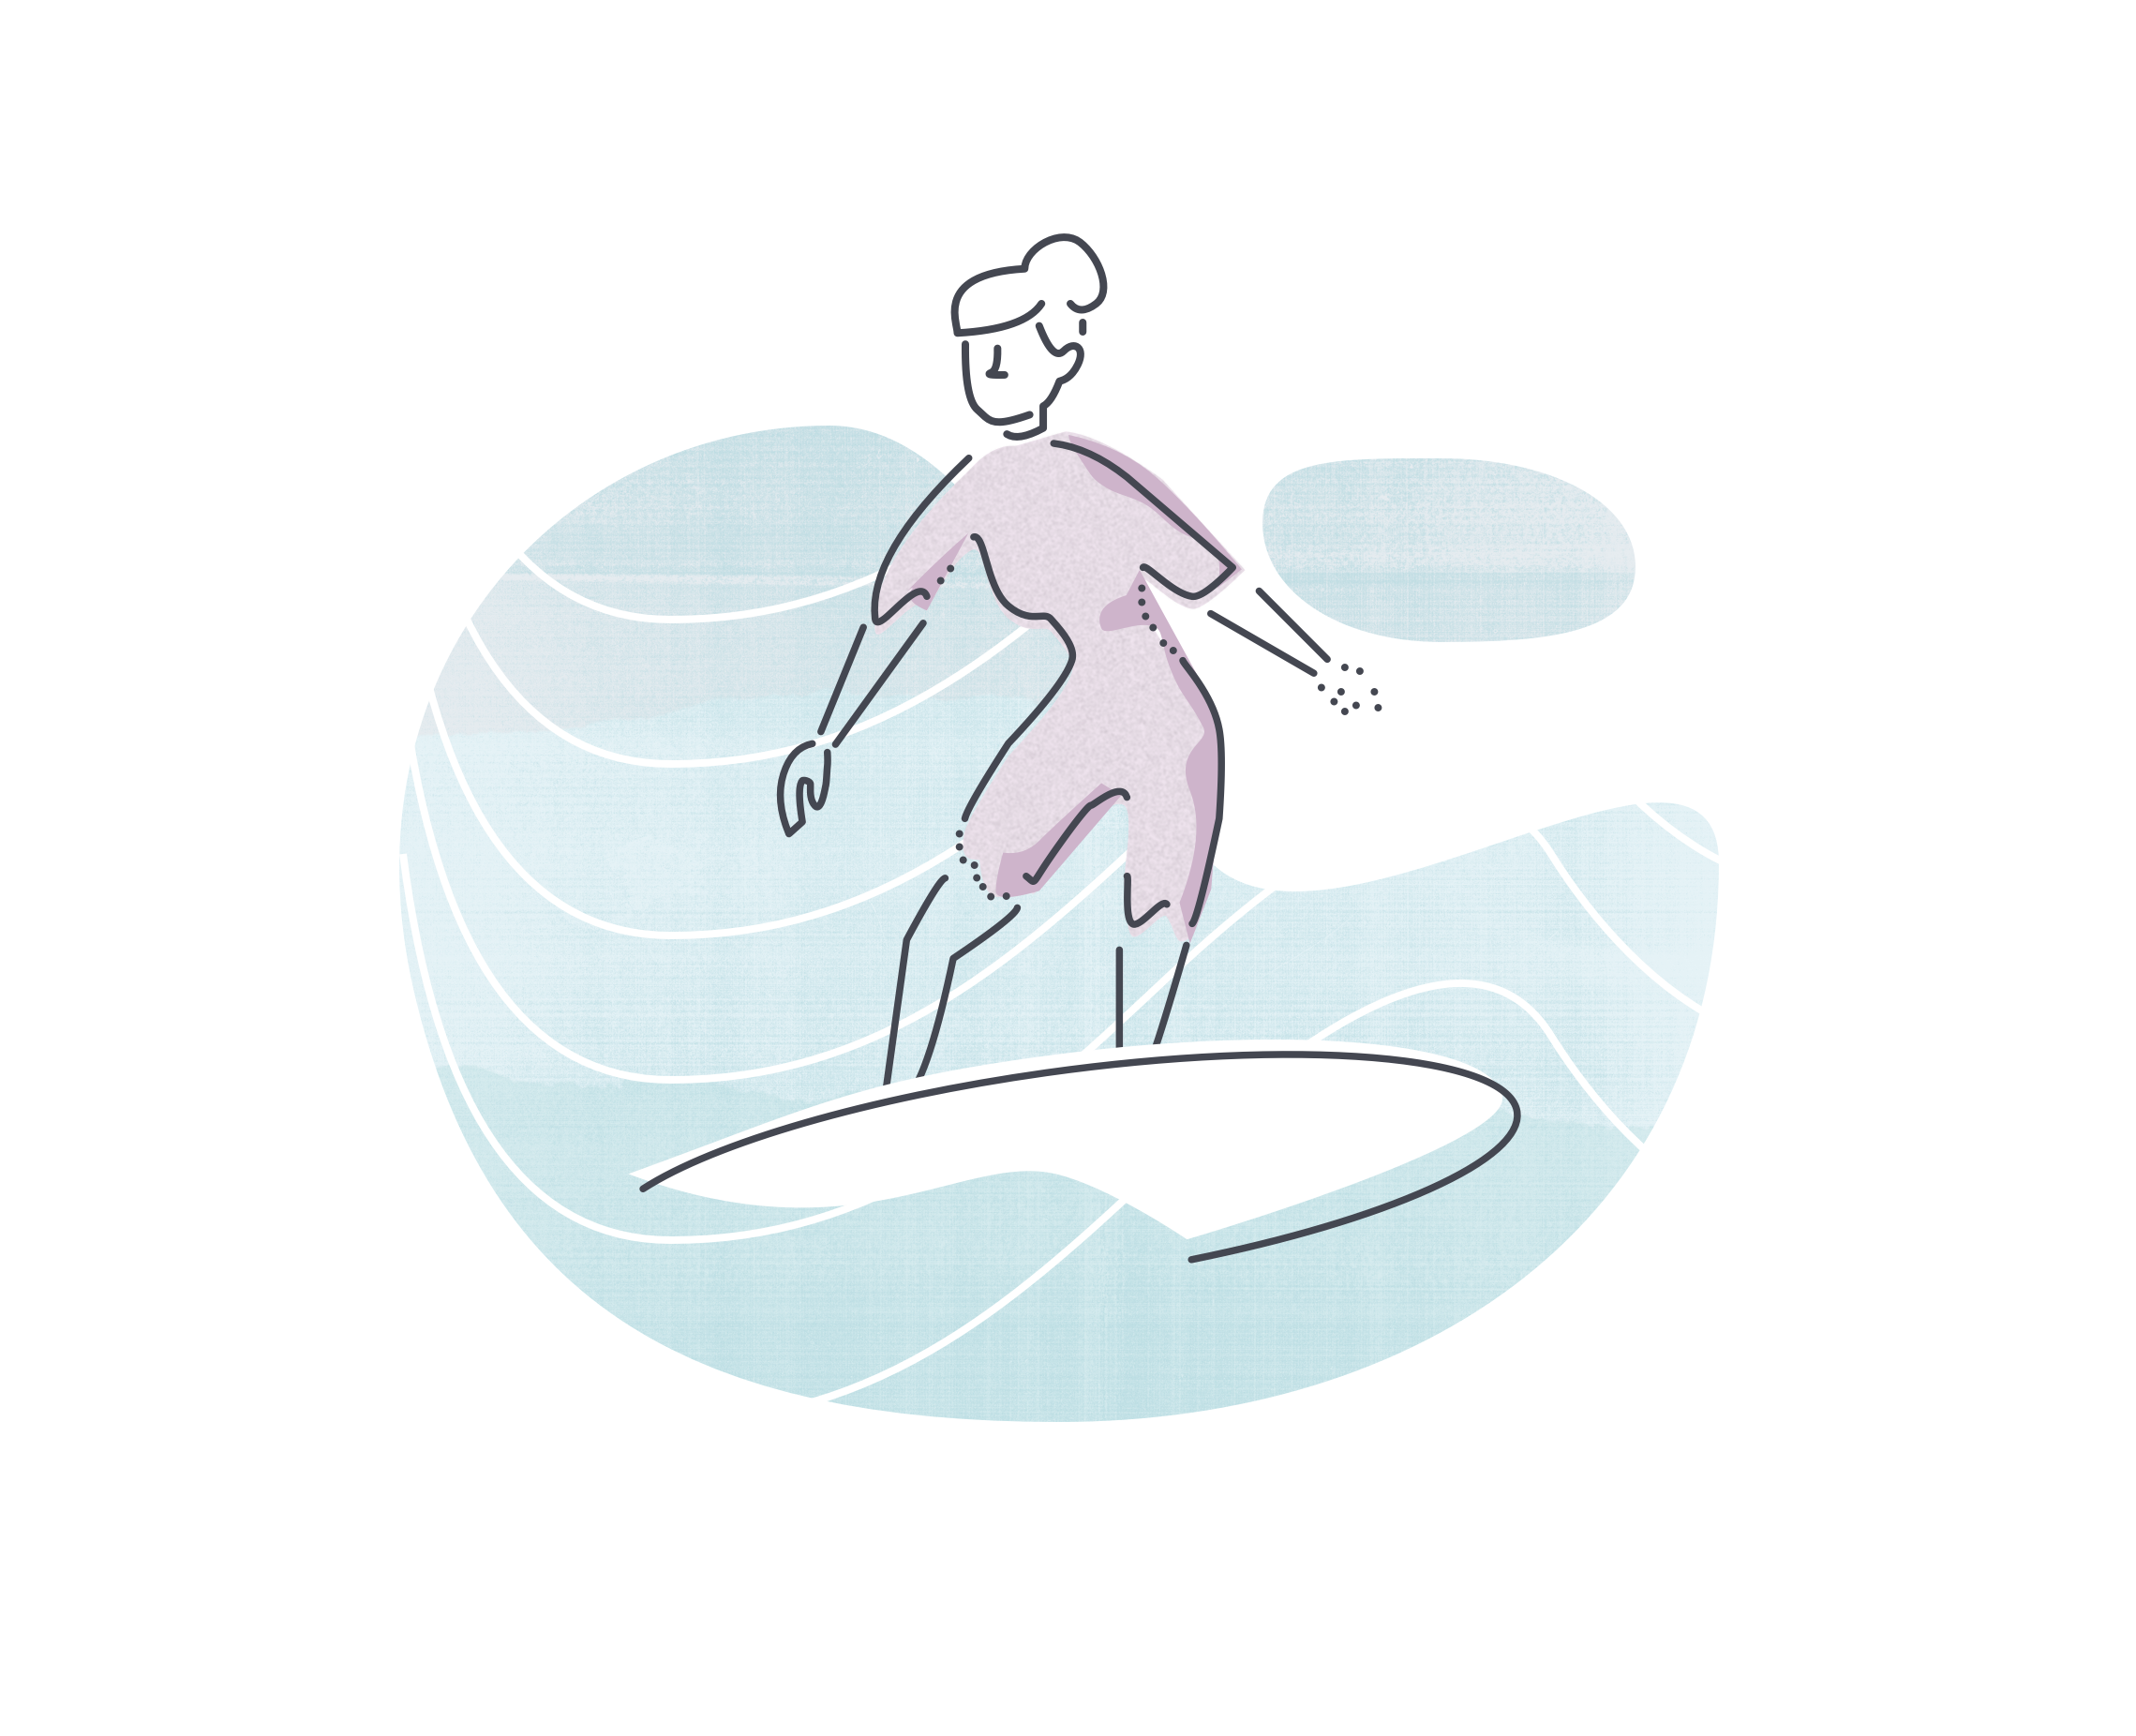 Illustration experiment 2 surf